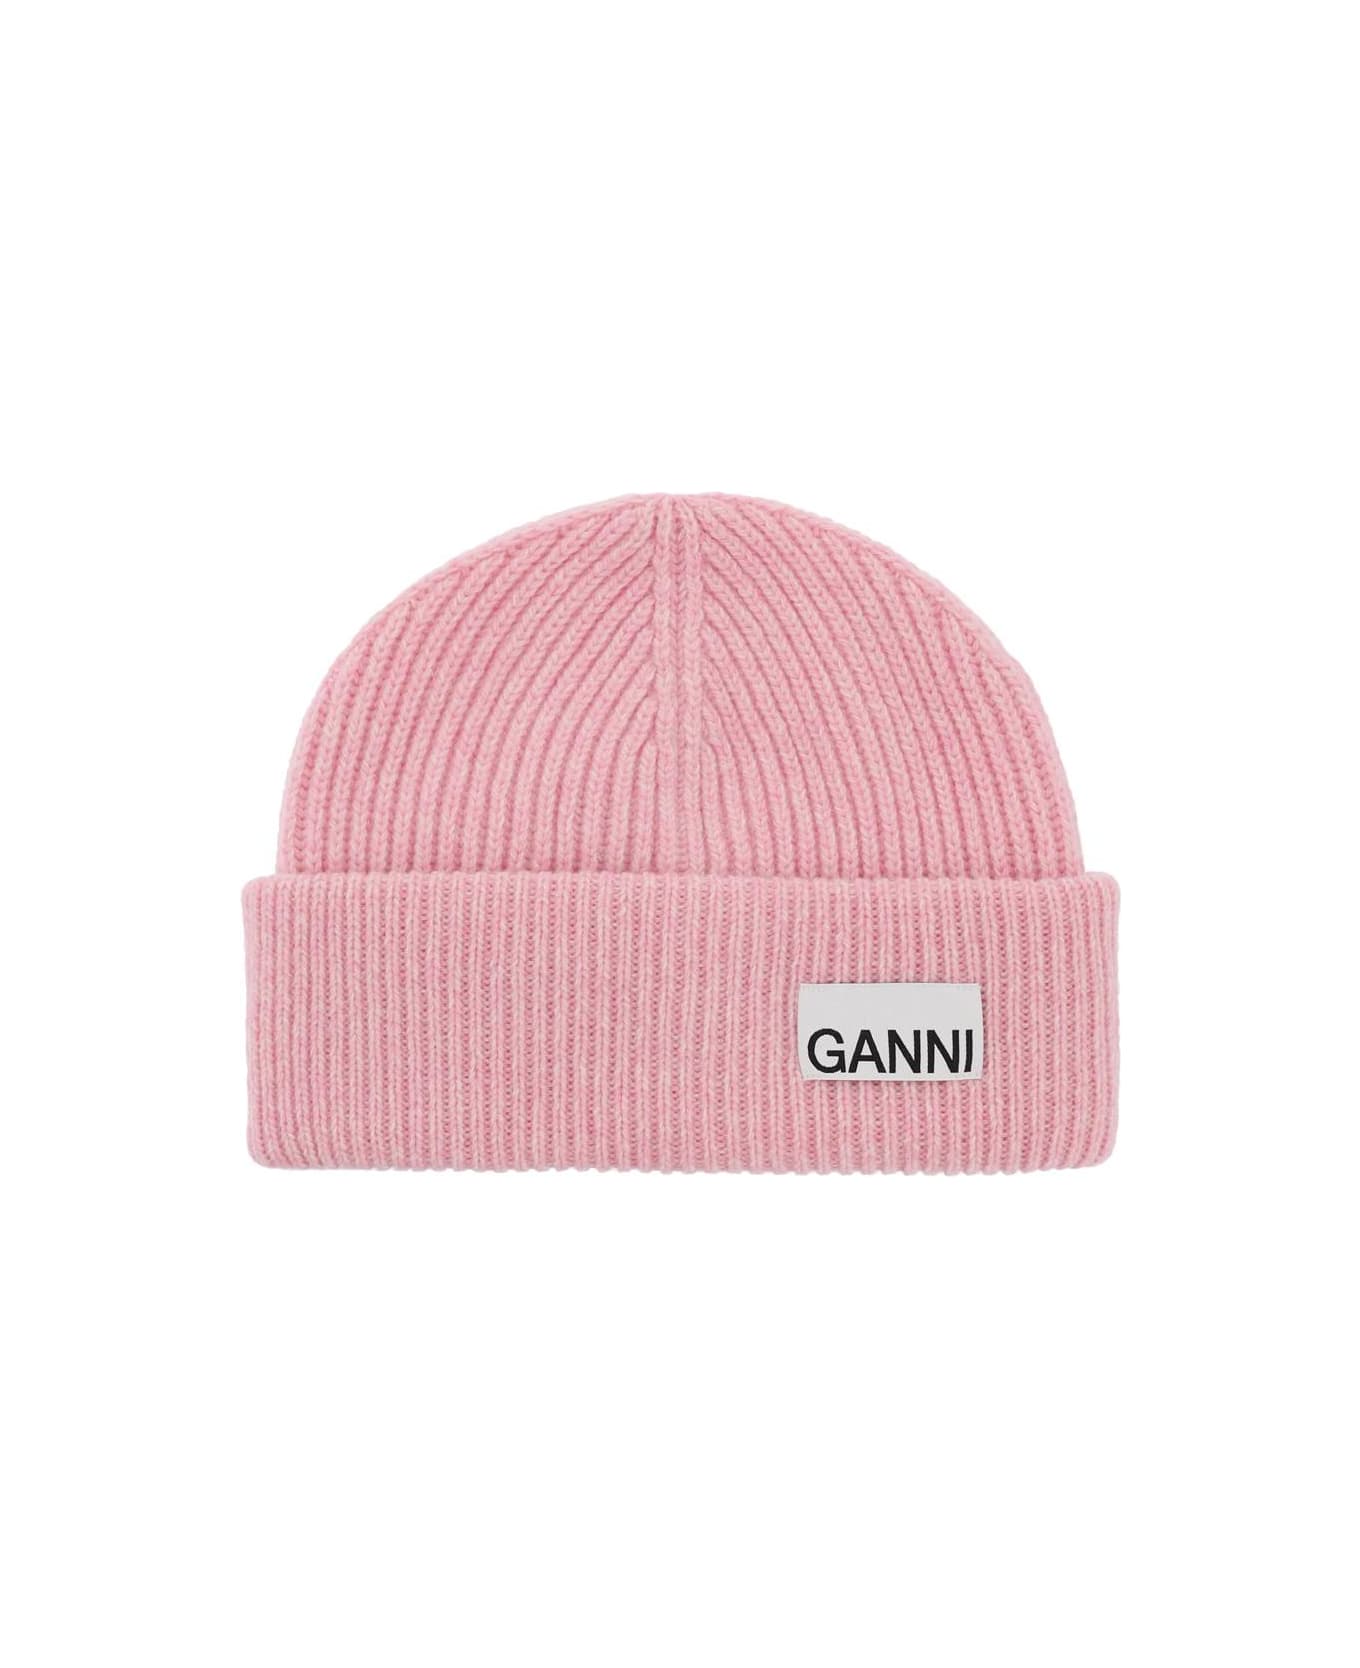 Ganni Pink Wool Blend Cap - MAUVE CHALK (Pink)